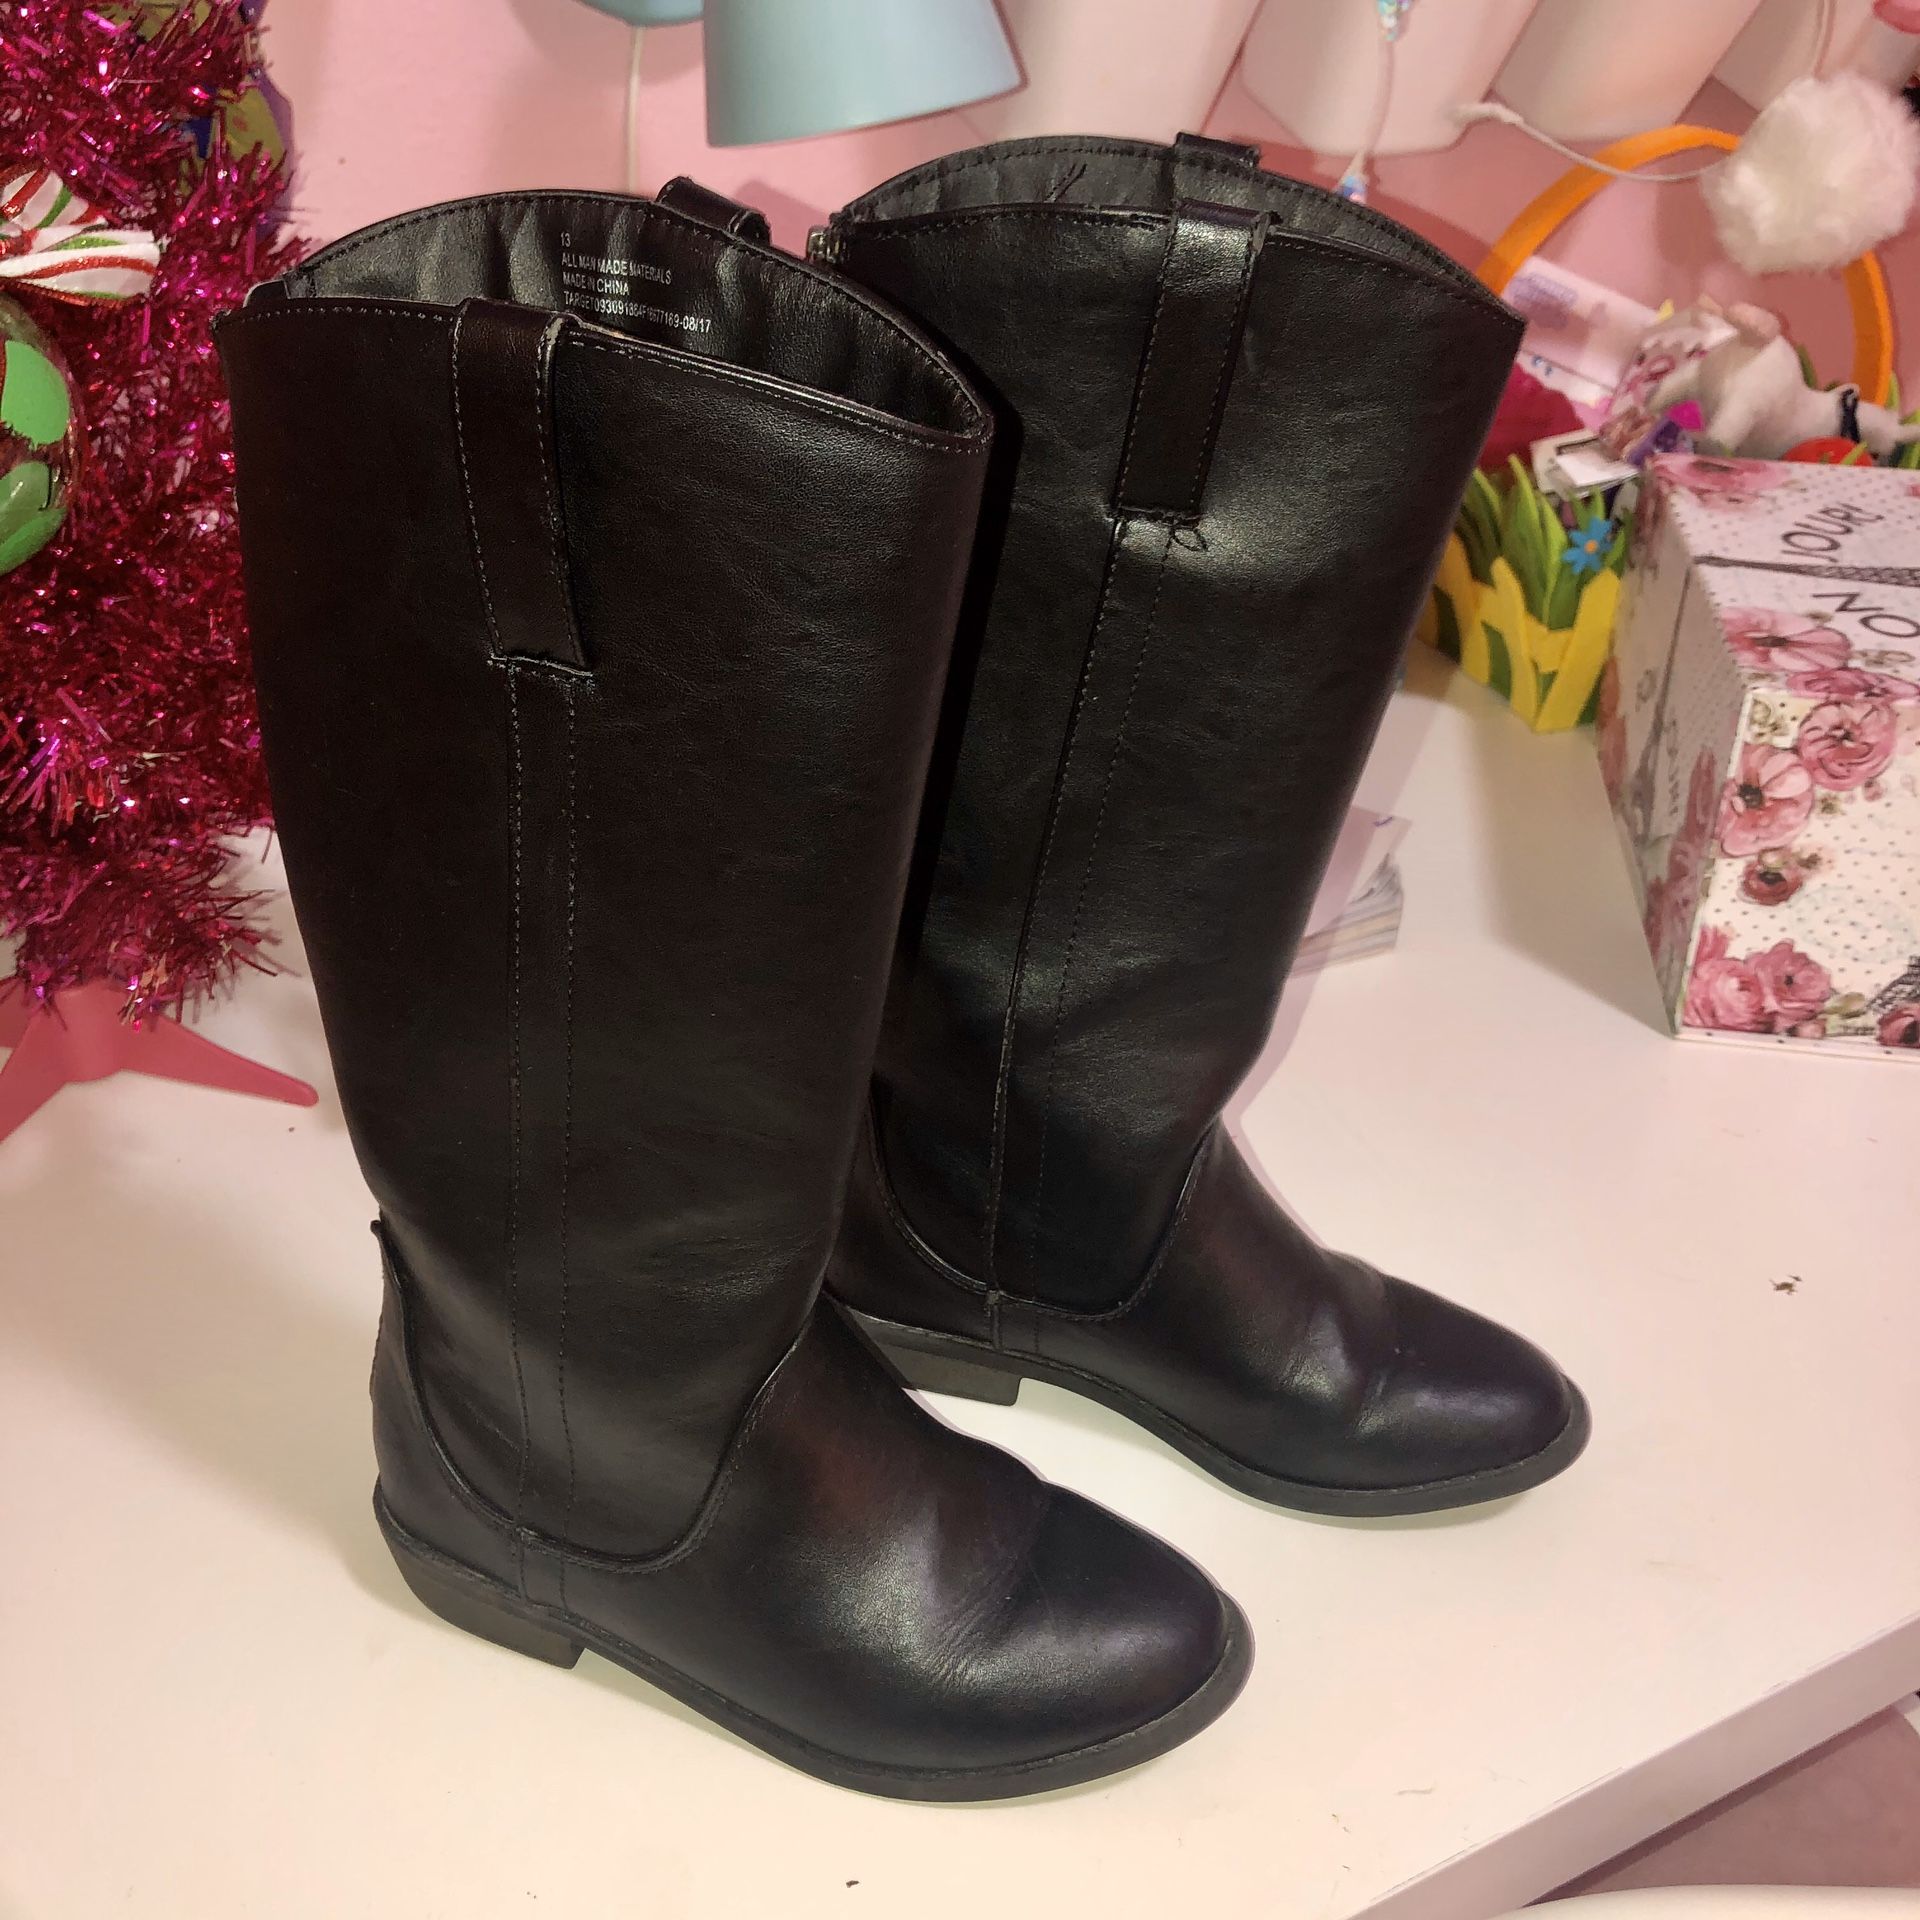 Girls size 13 Cat & Jack Black faux leather boots